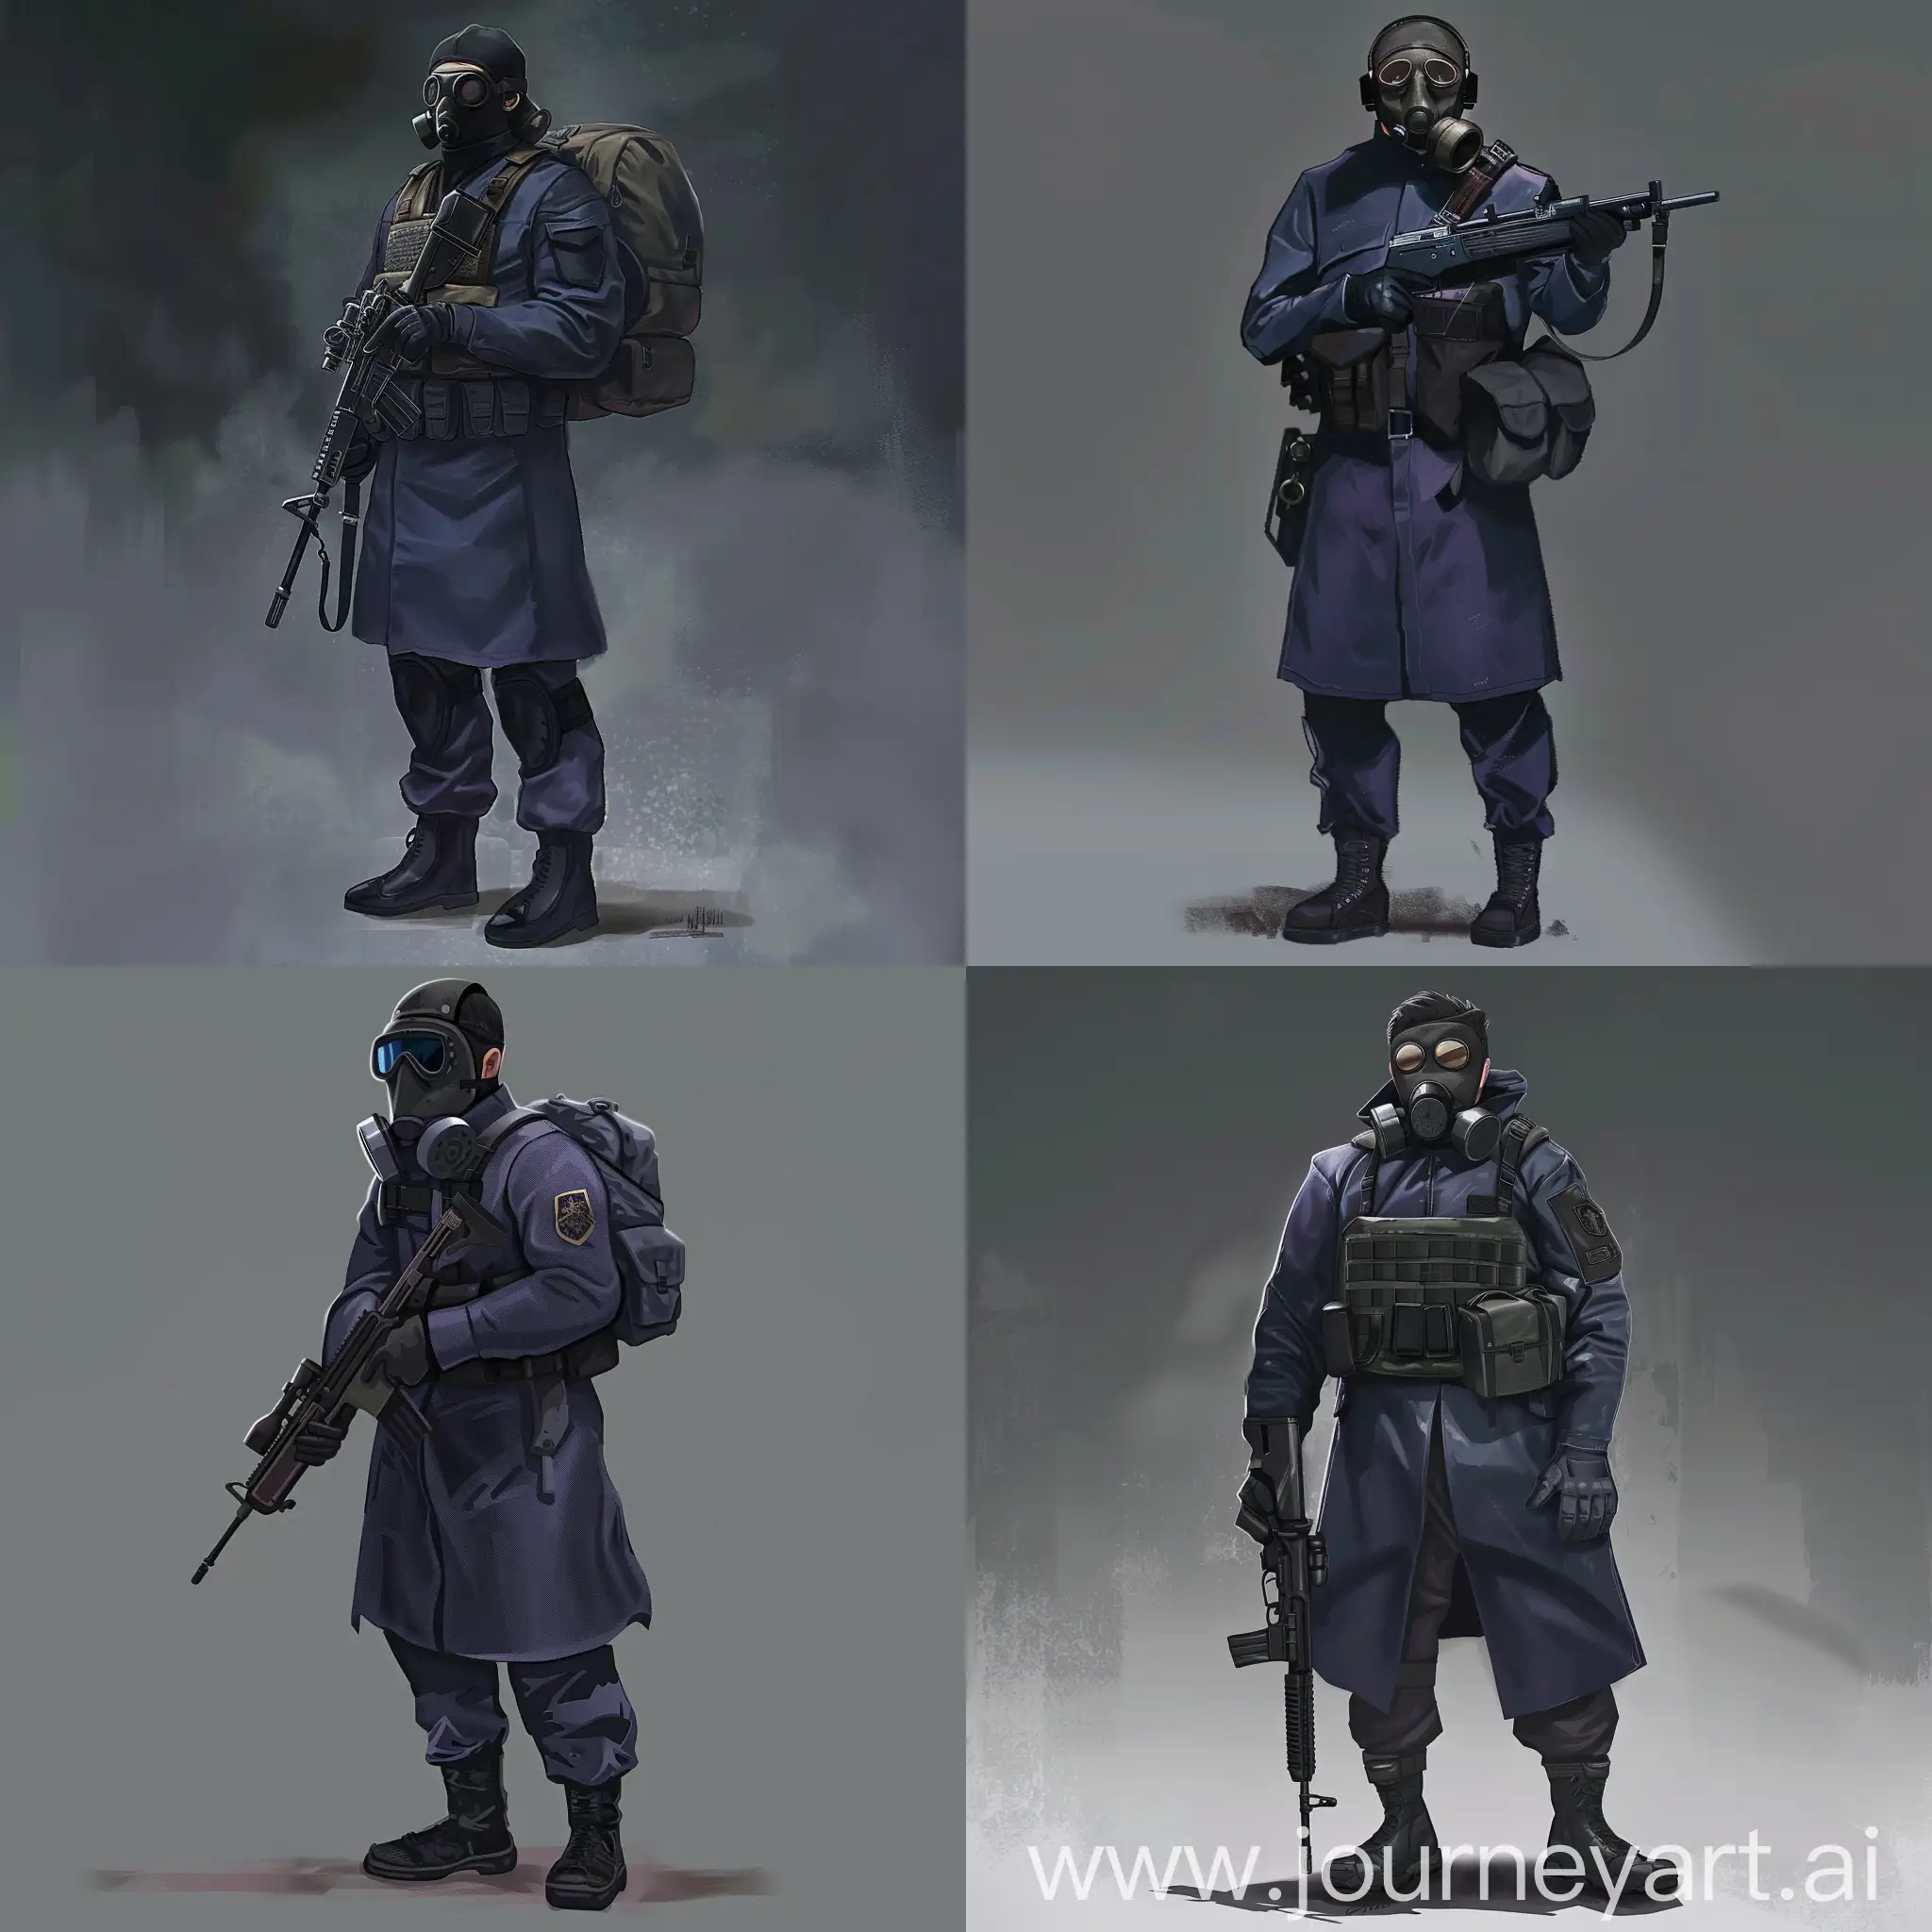 Mercenary-in-Dark-Purple-Military-Raincoat-with-Sniper-Rifle